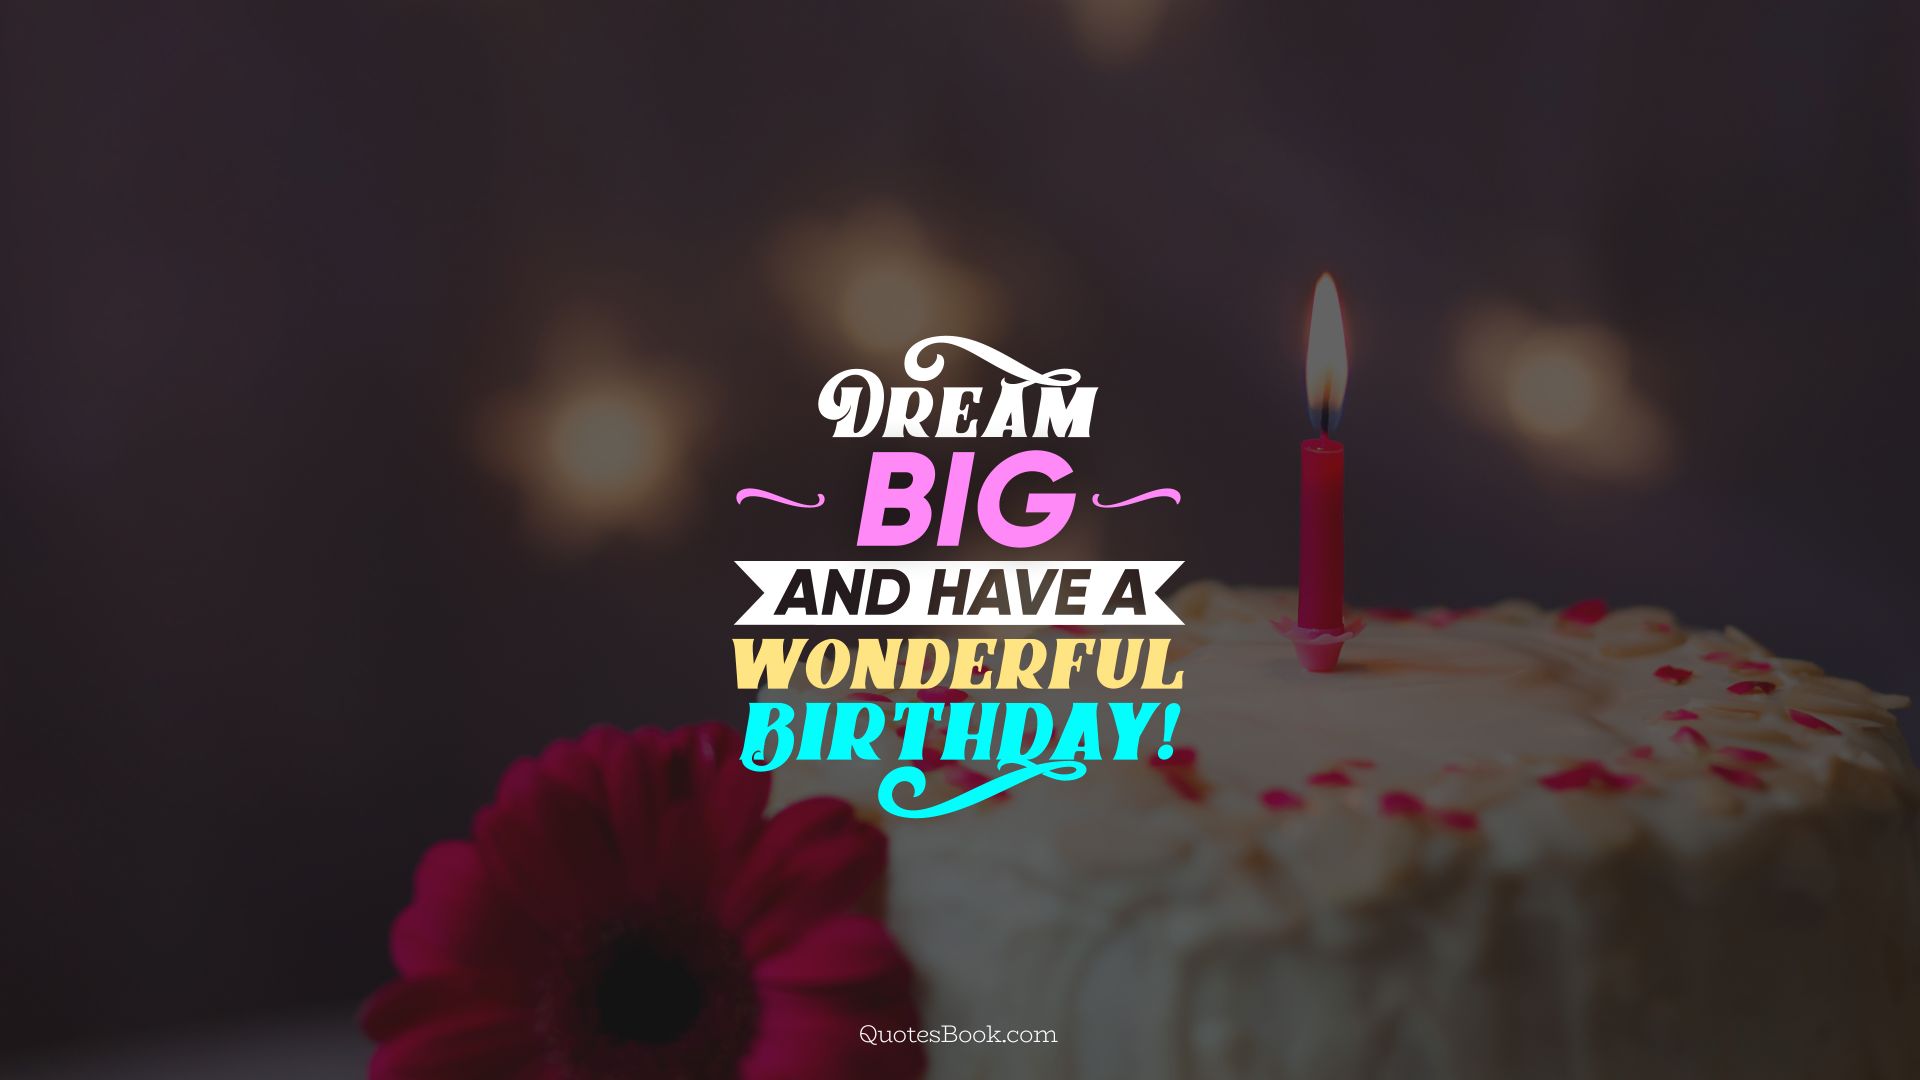 Dream big and have a wonderful birthday!